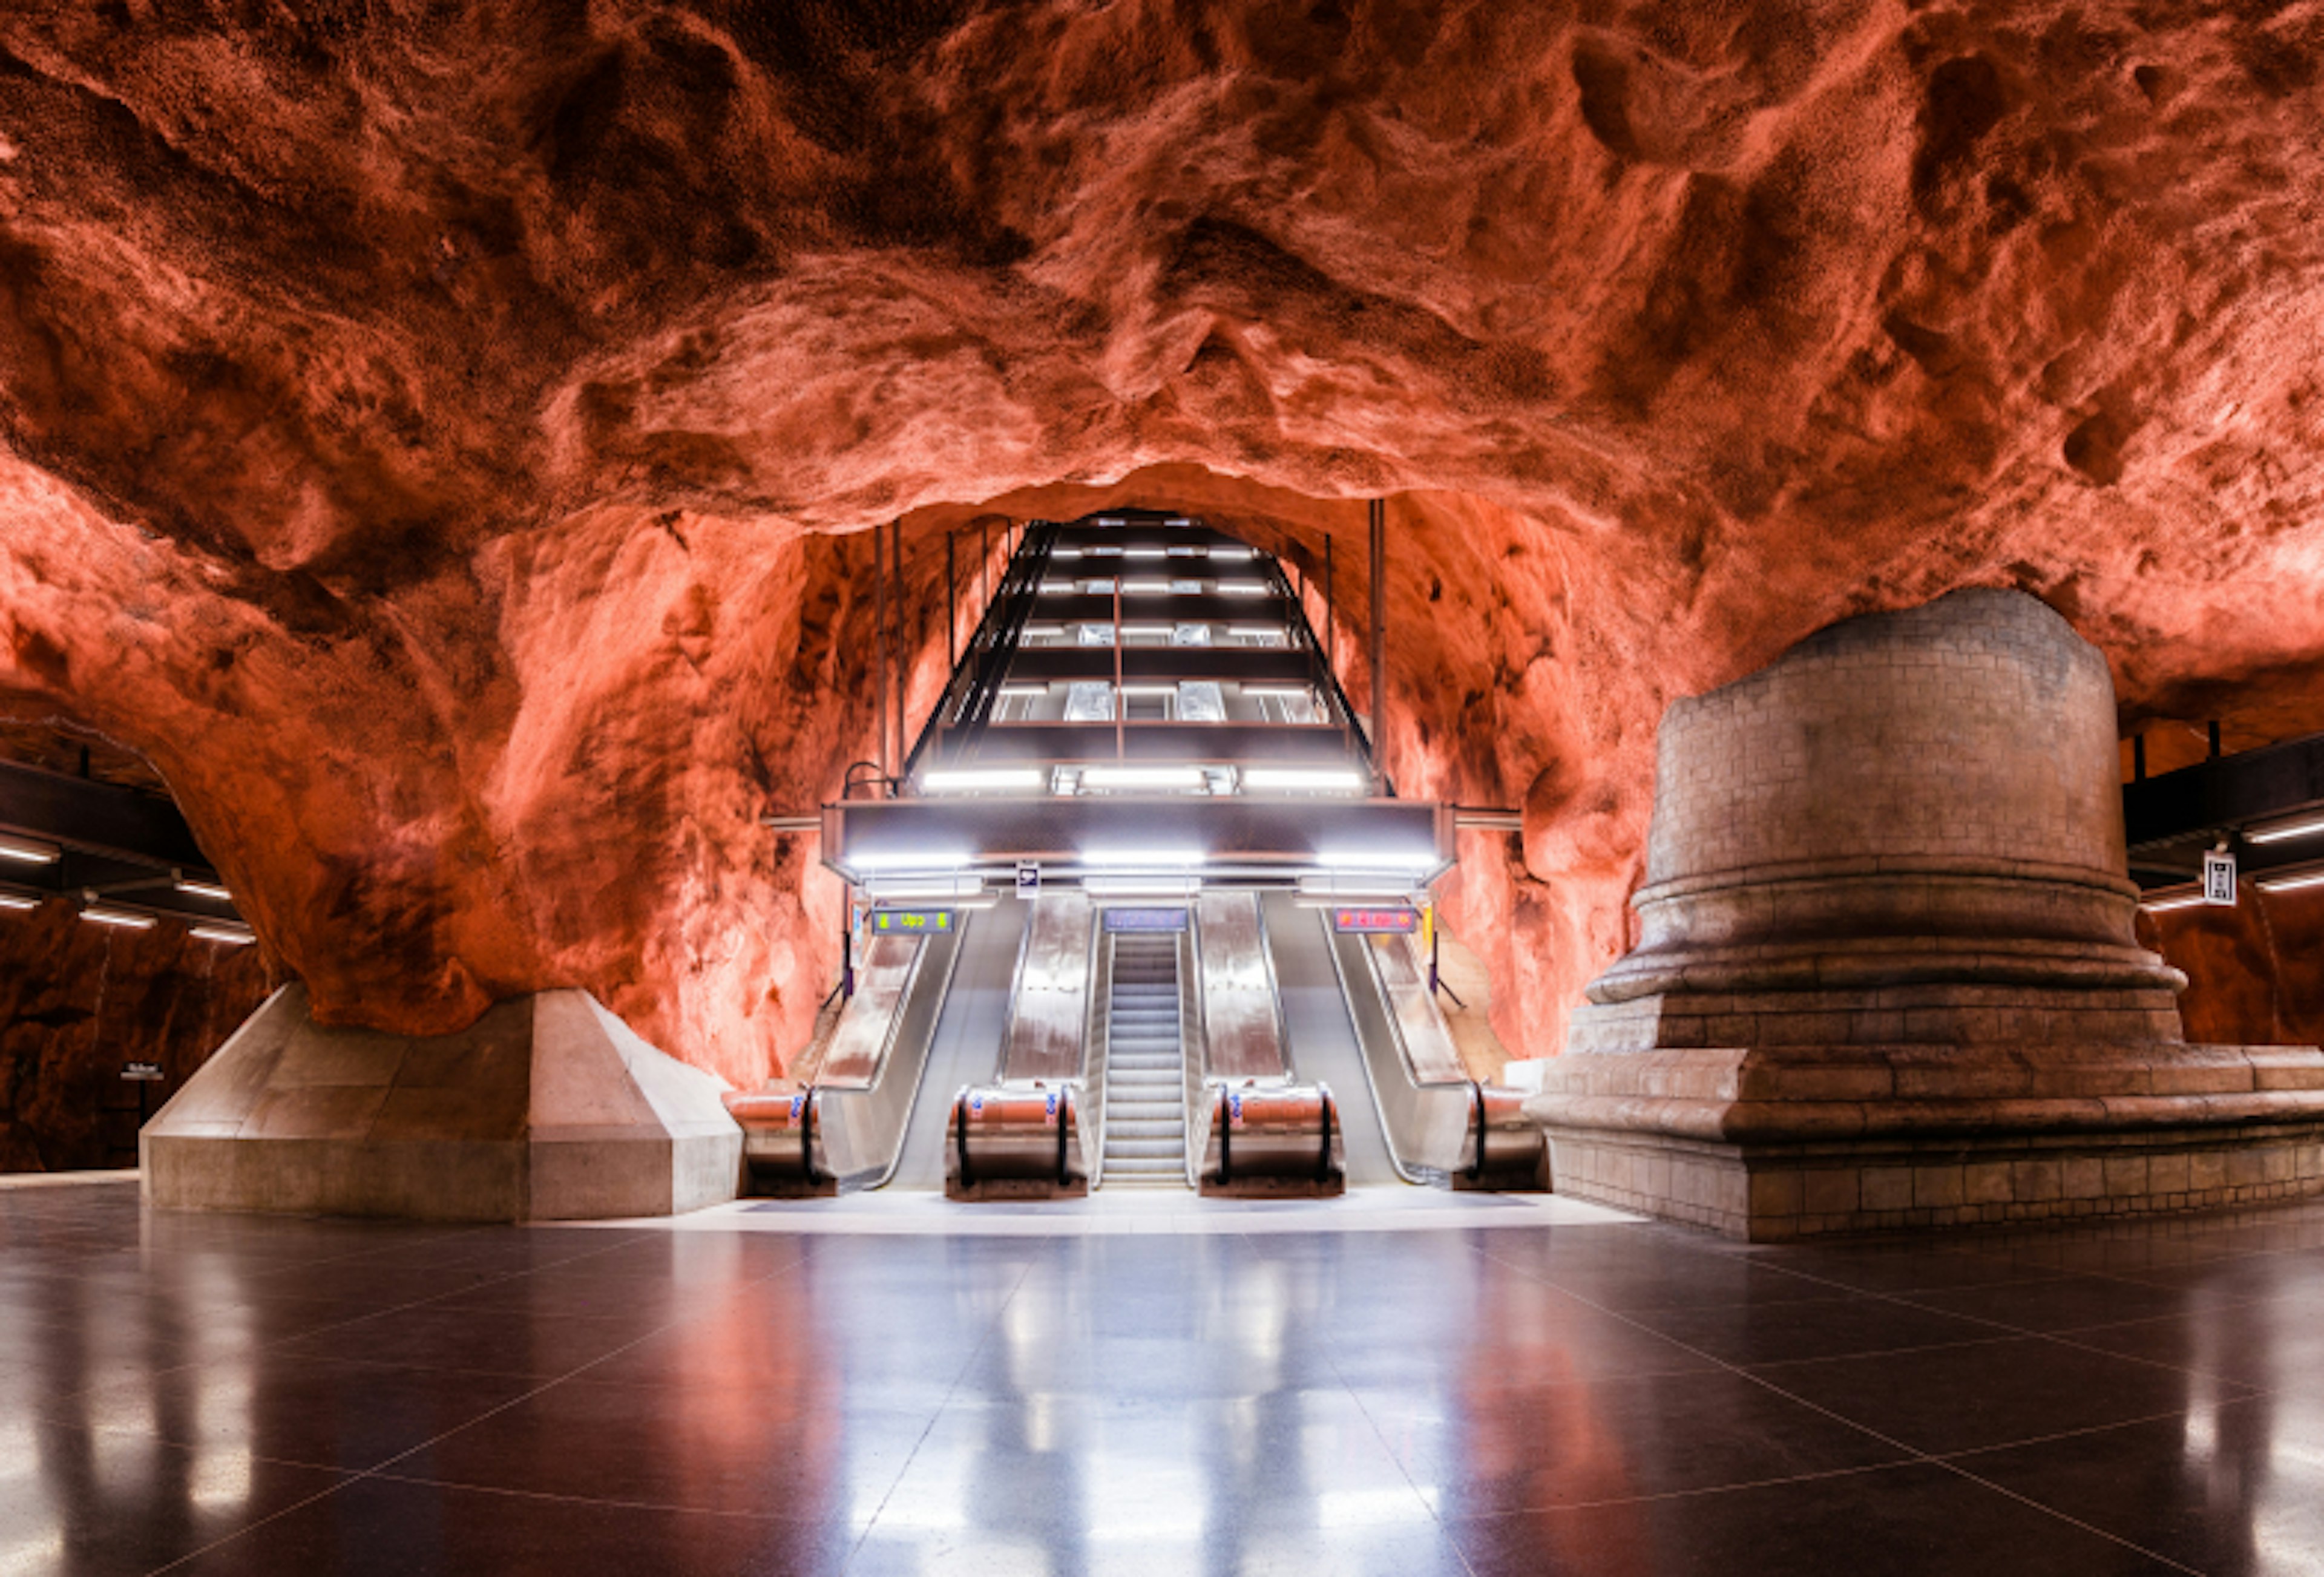 Radhuset Station of the Subway in Stockholm, Sweden